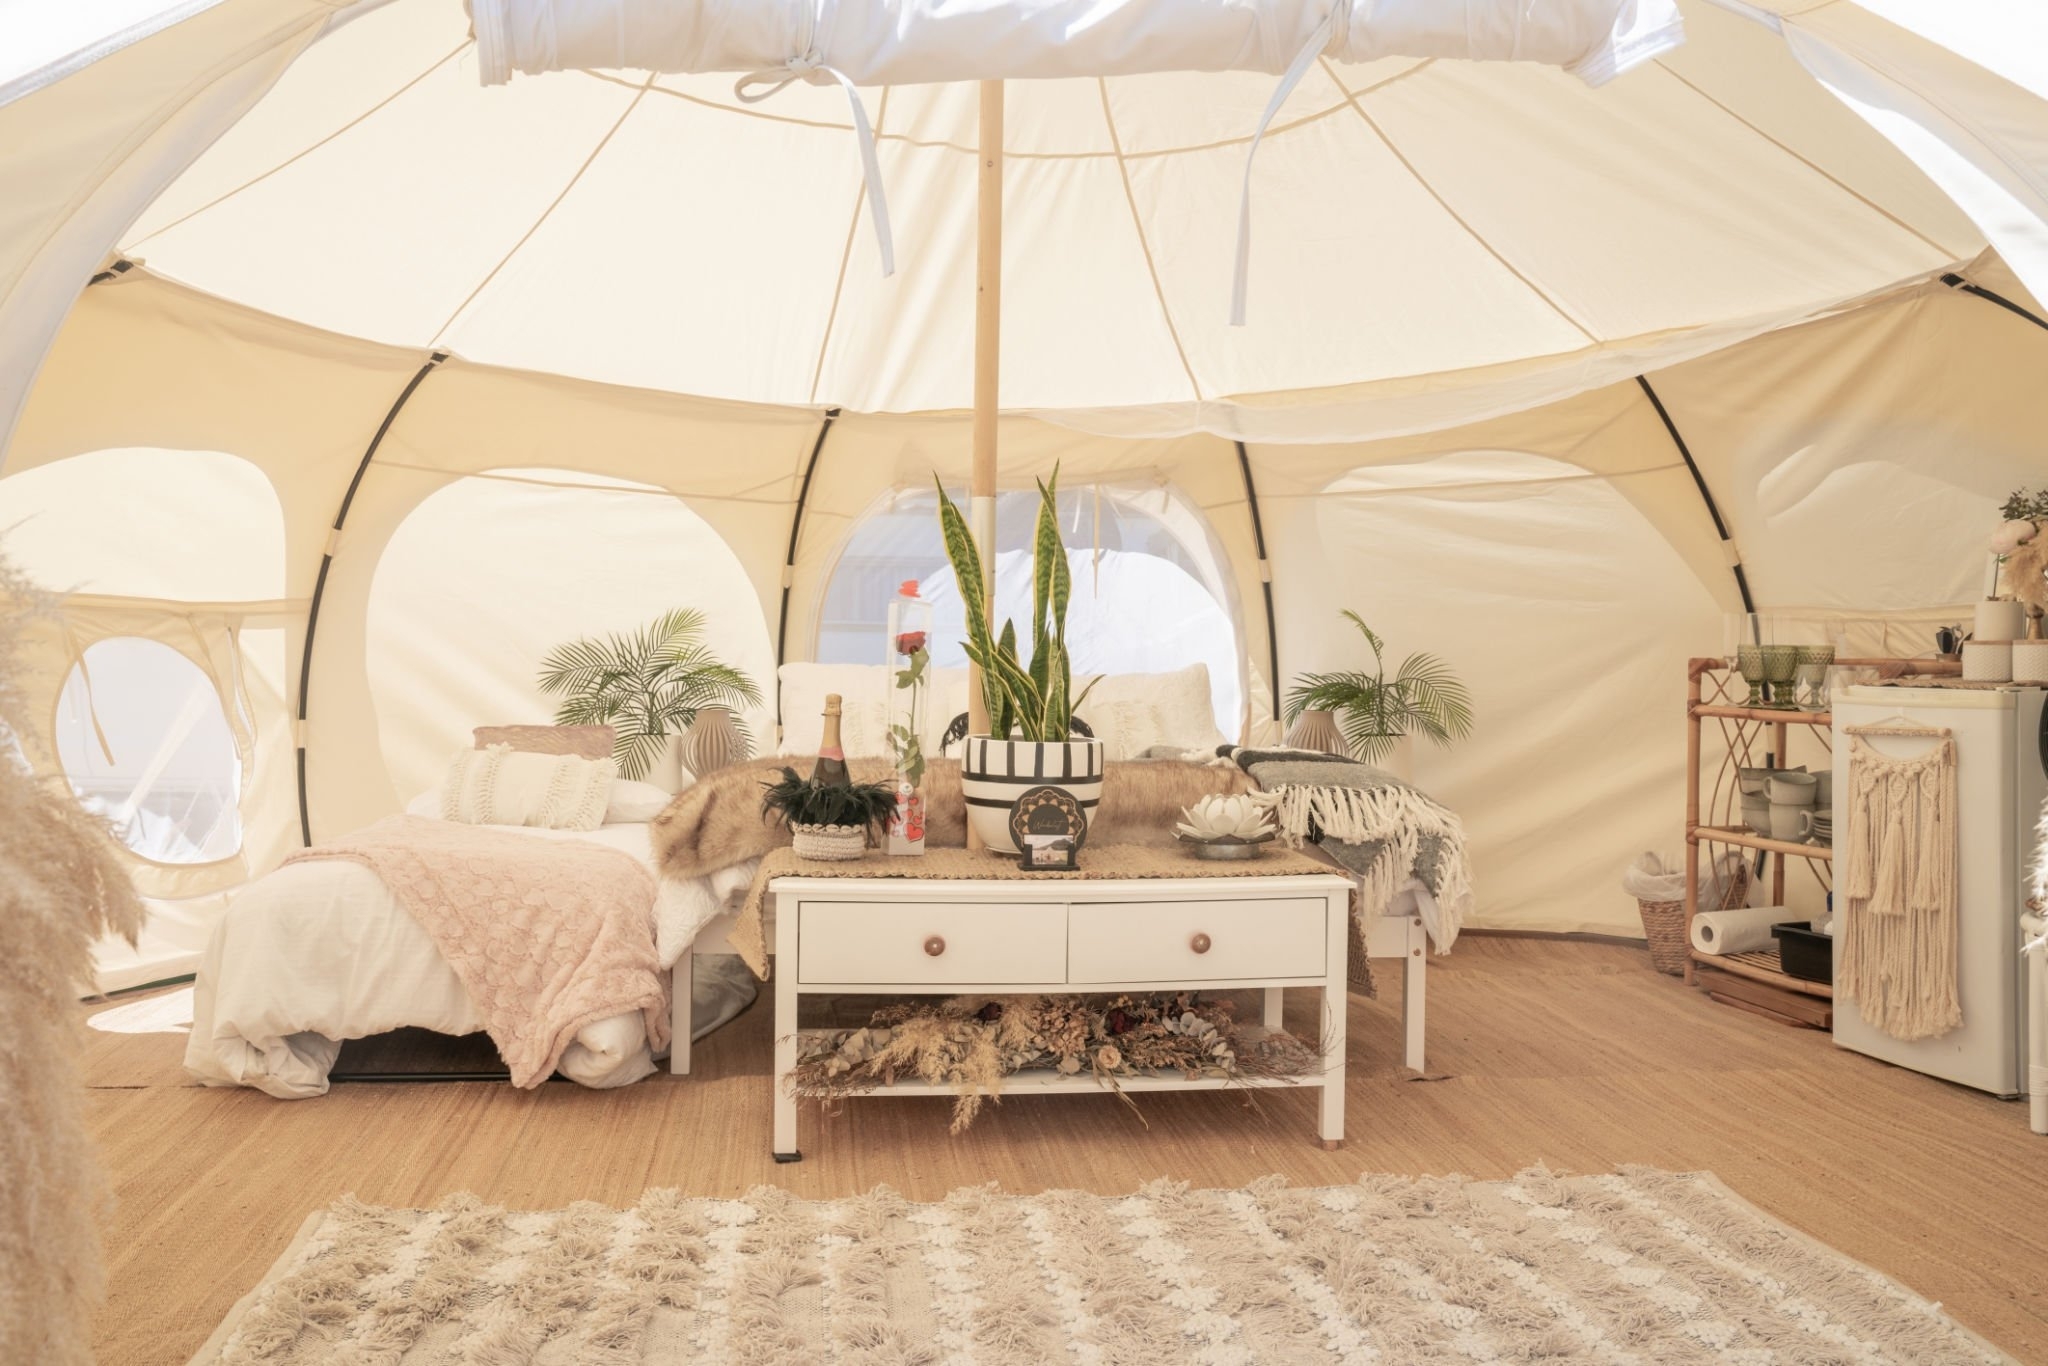 luxury camping